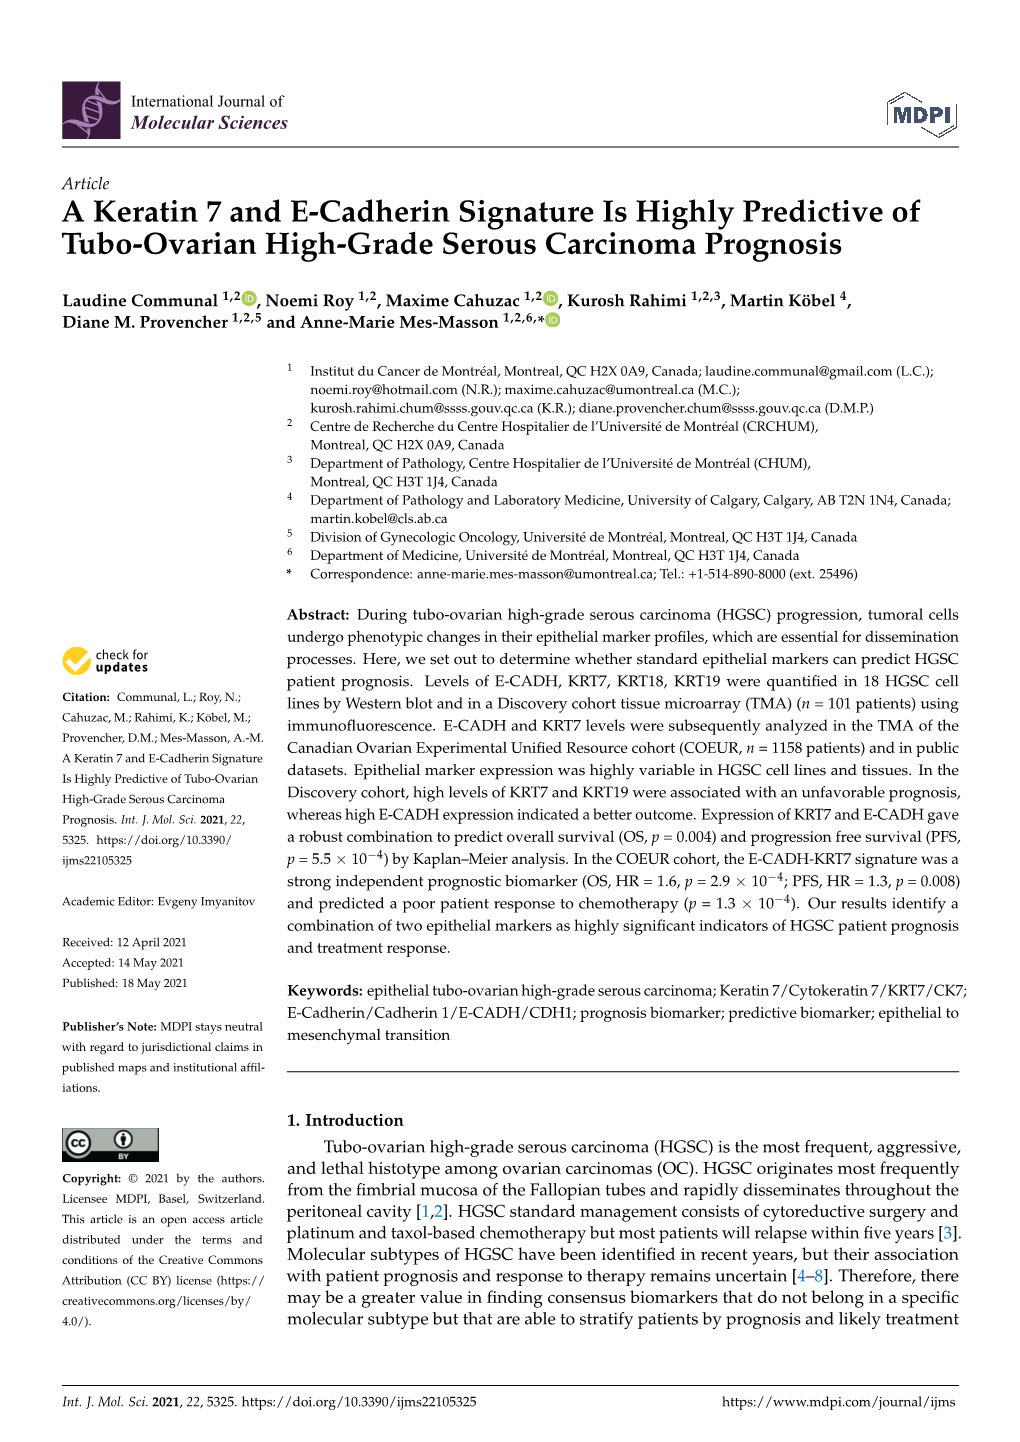 A Keratin 7 and E-Cadherin Signature Is Highly Predictive of Tubo-Ovarian High-Grade Serous Carcinoma Prognosis